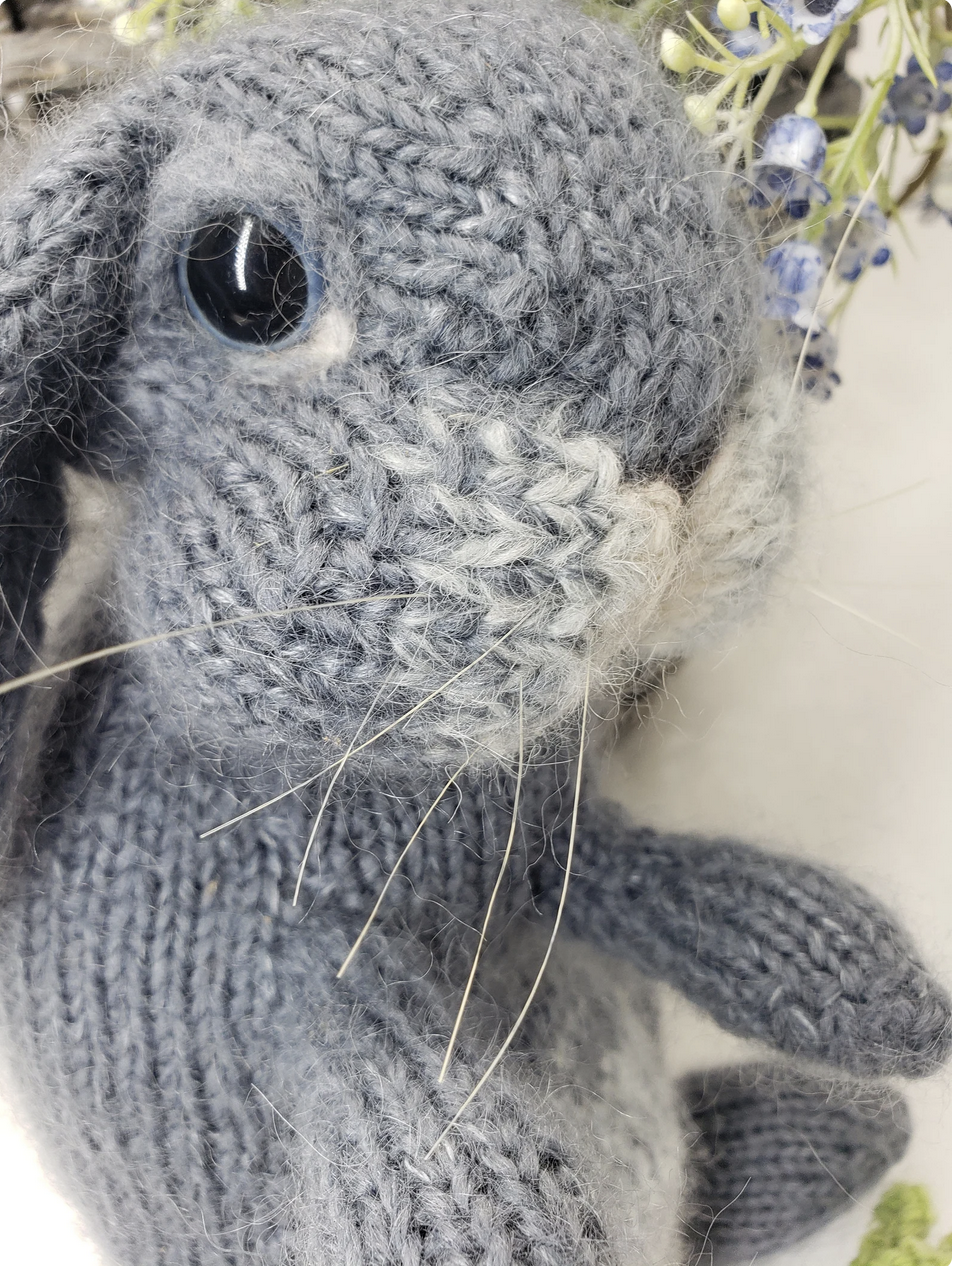 Handmade Fuzzy Blue Knitted Bunny